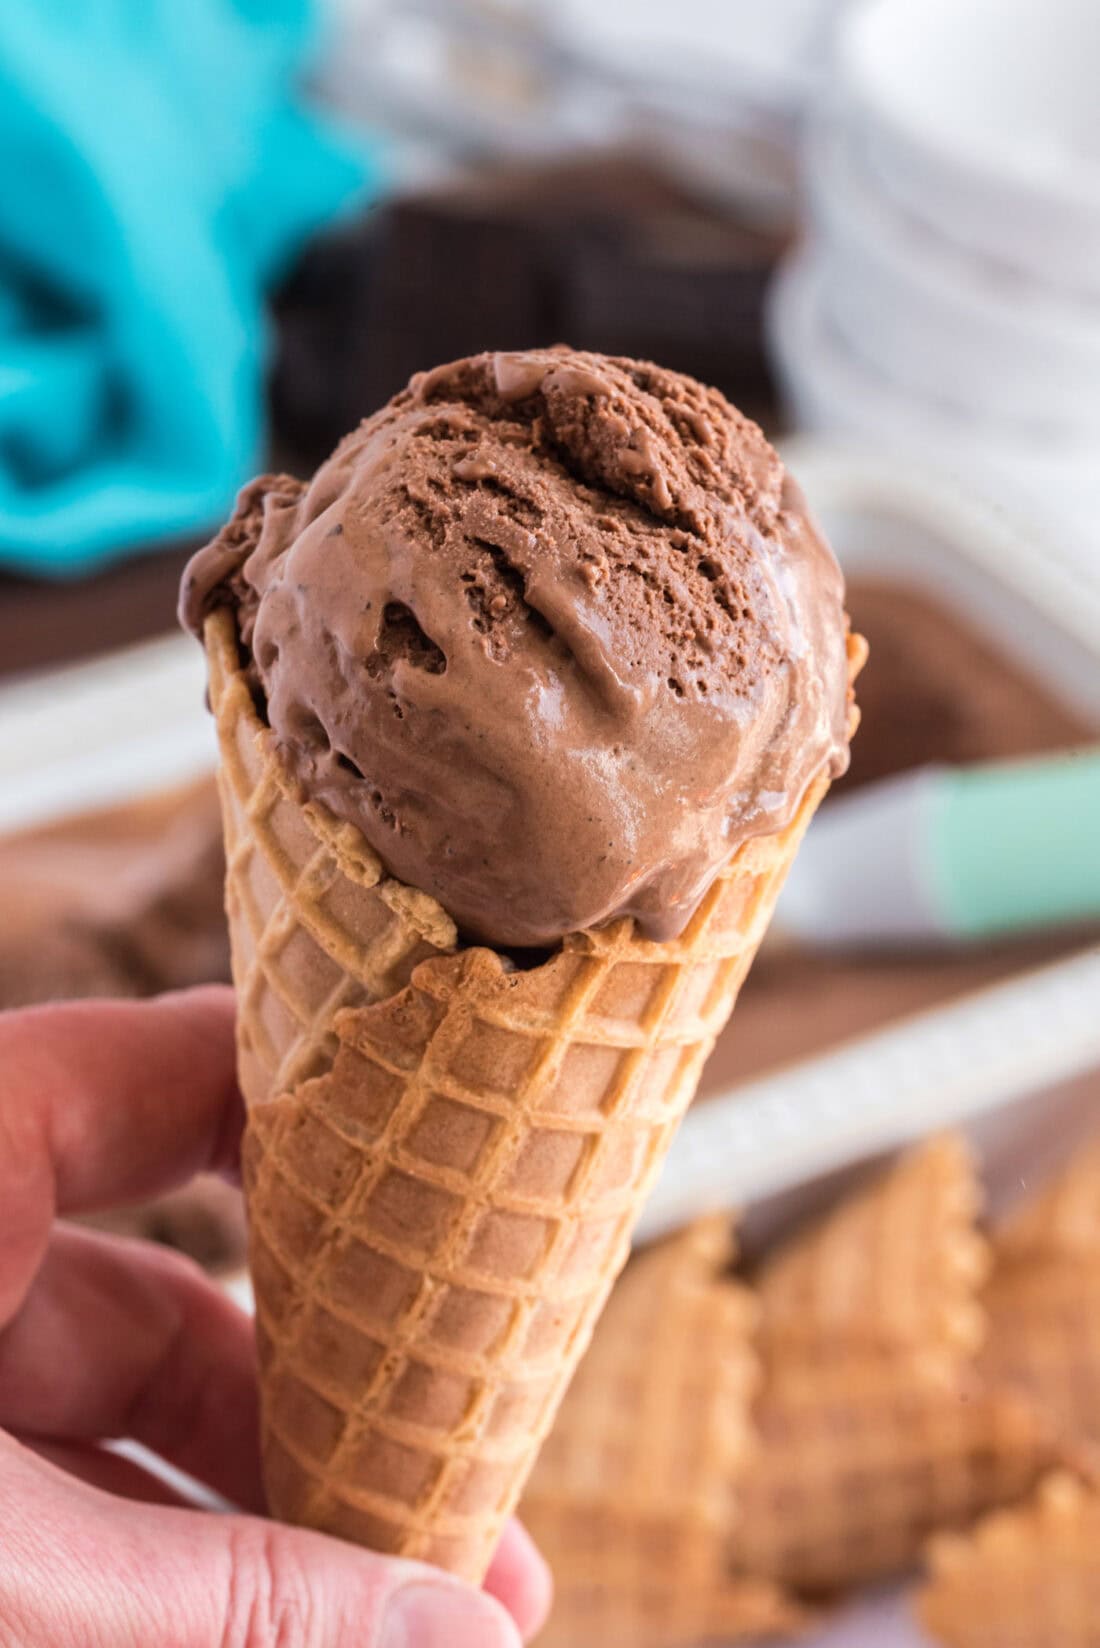 Hand holding a cone of Homemade Chocolate Ice Cream